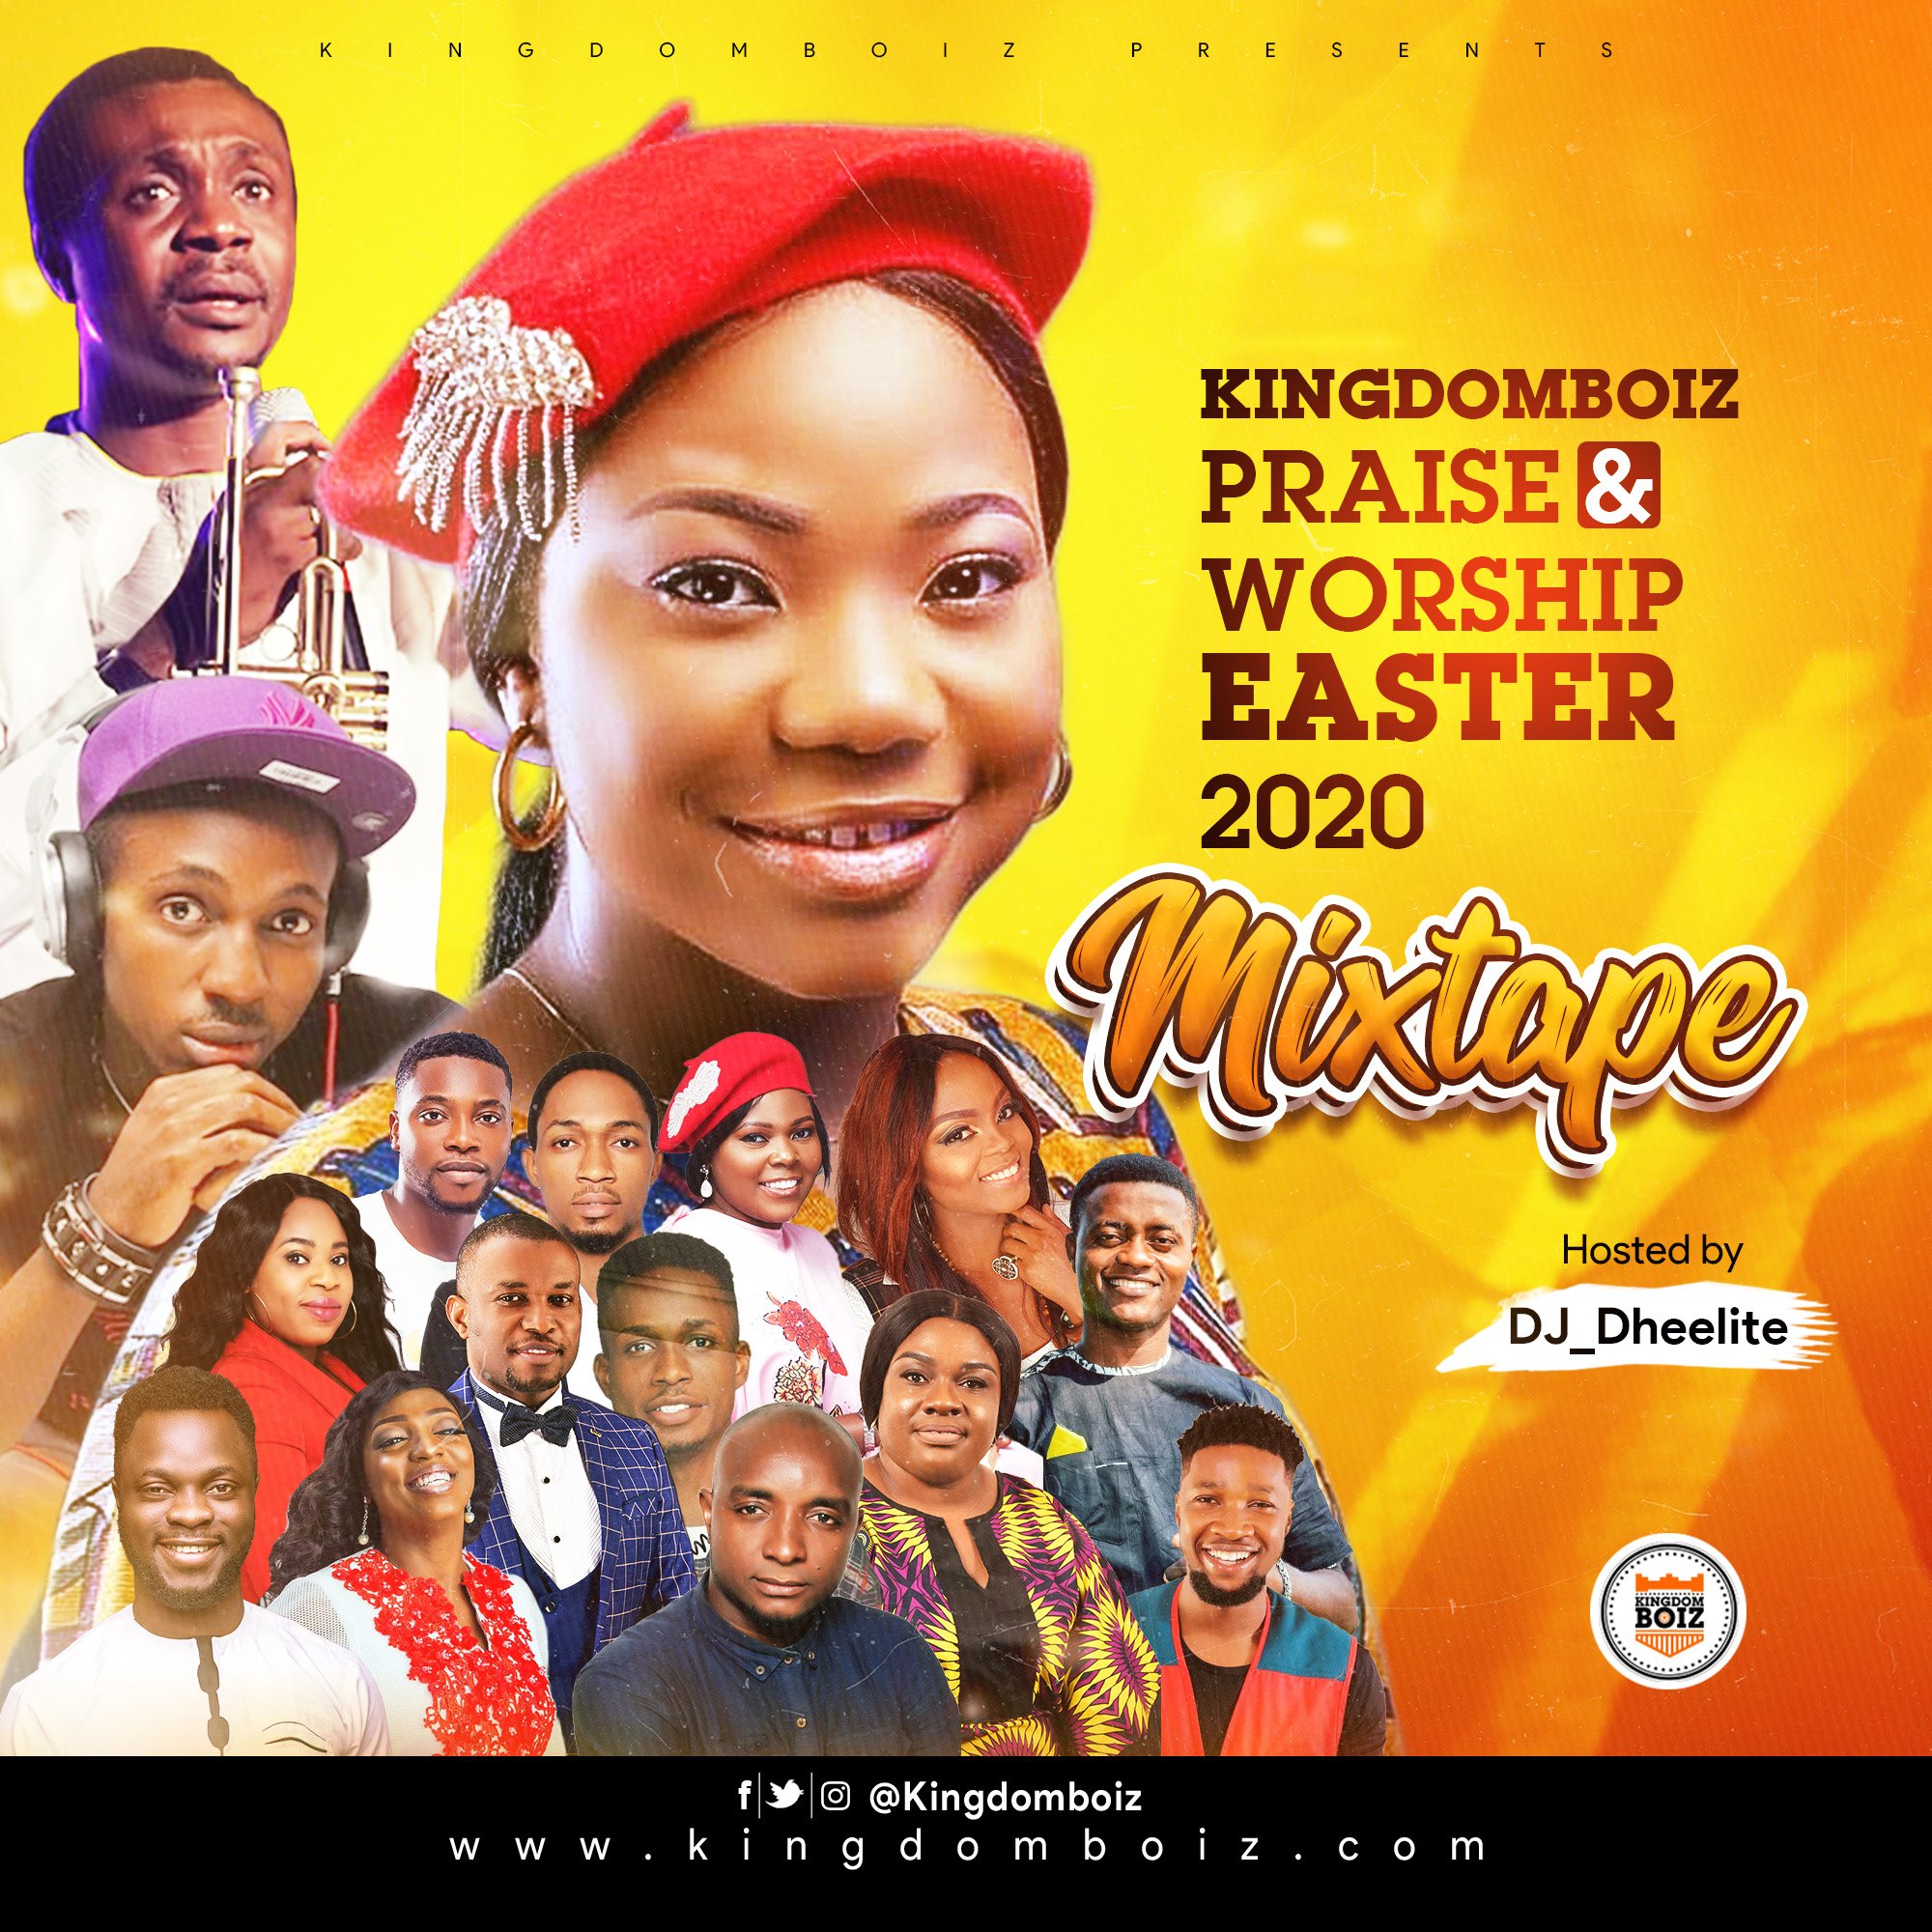 Kingdomboiz Praise & Worship Easter 2020 Mixtape - Kingdomboiz